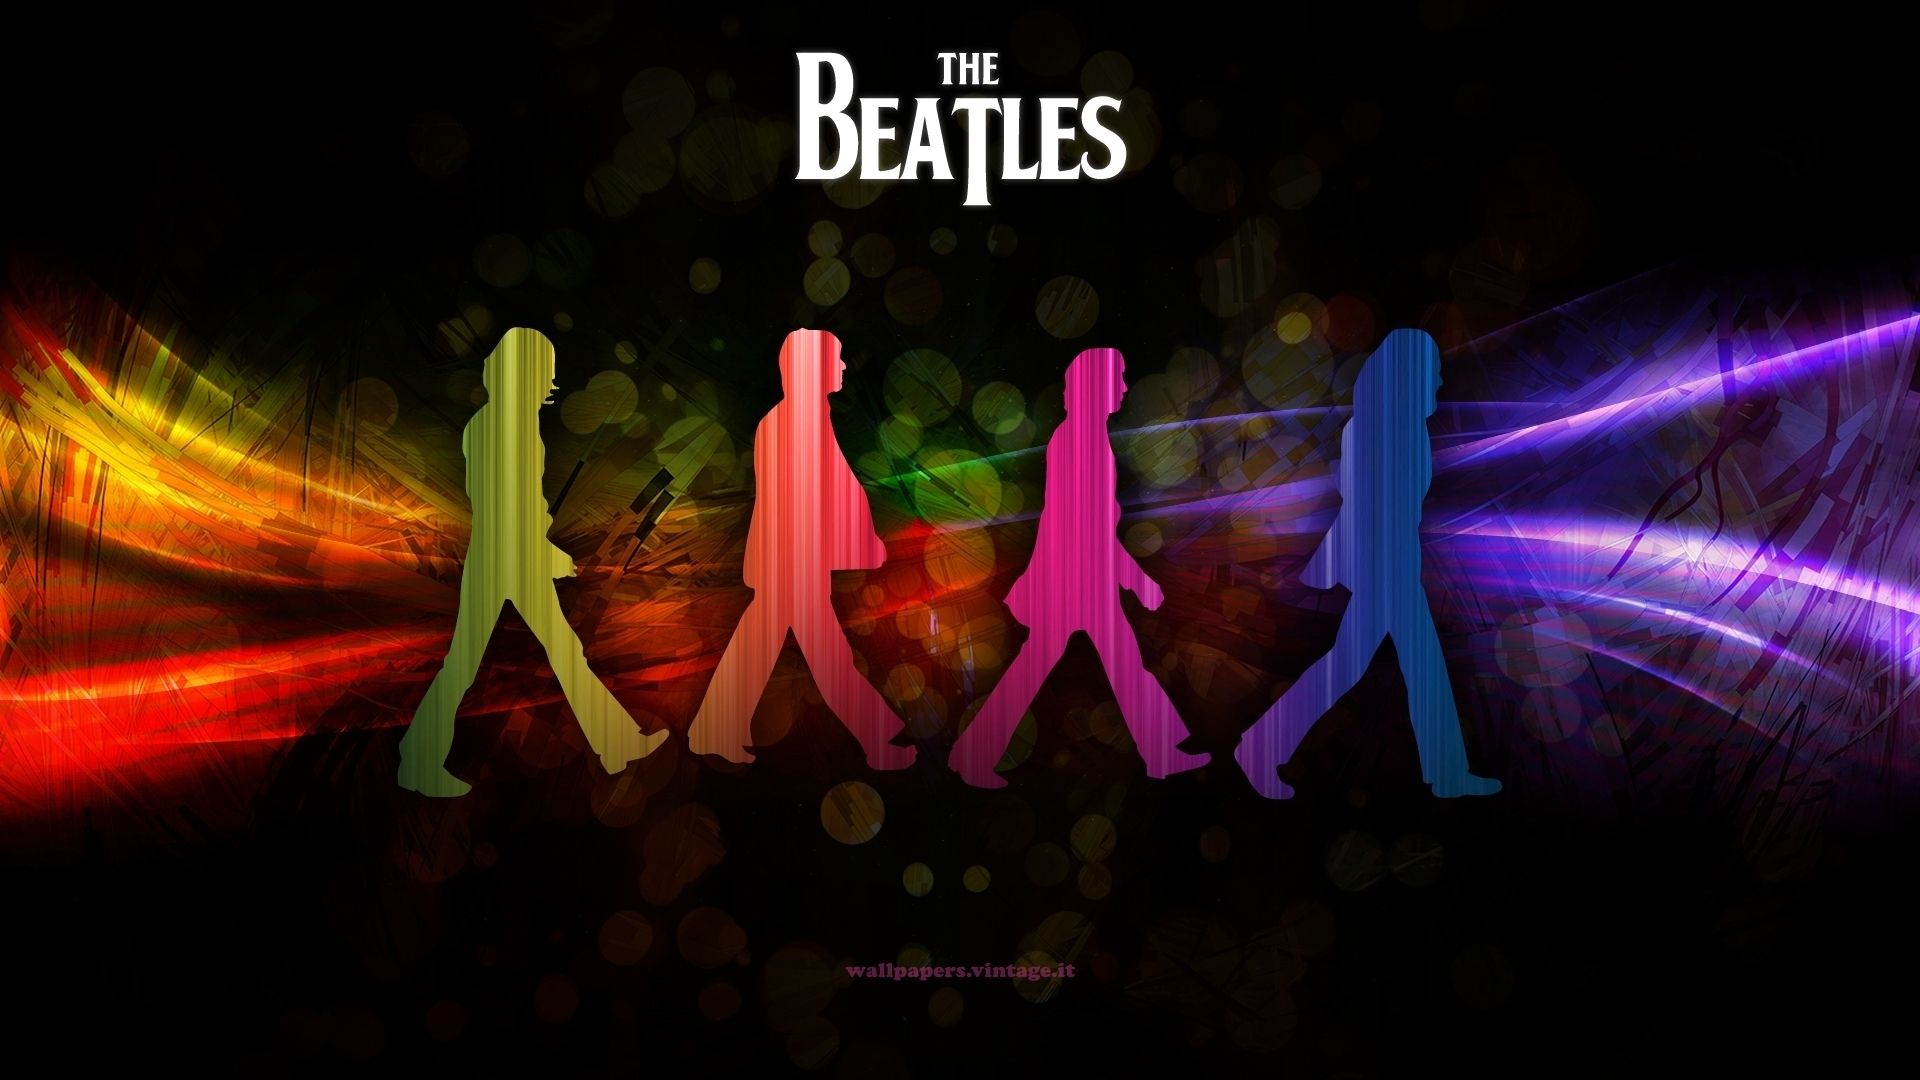 Beatles 4K wallpaper for your desktop or mobile screen free